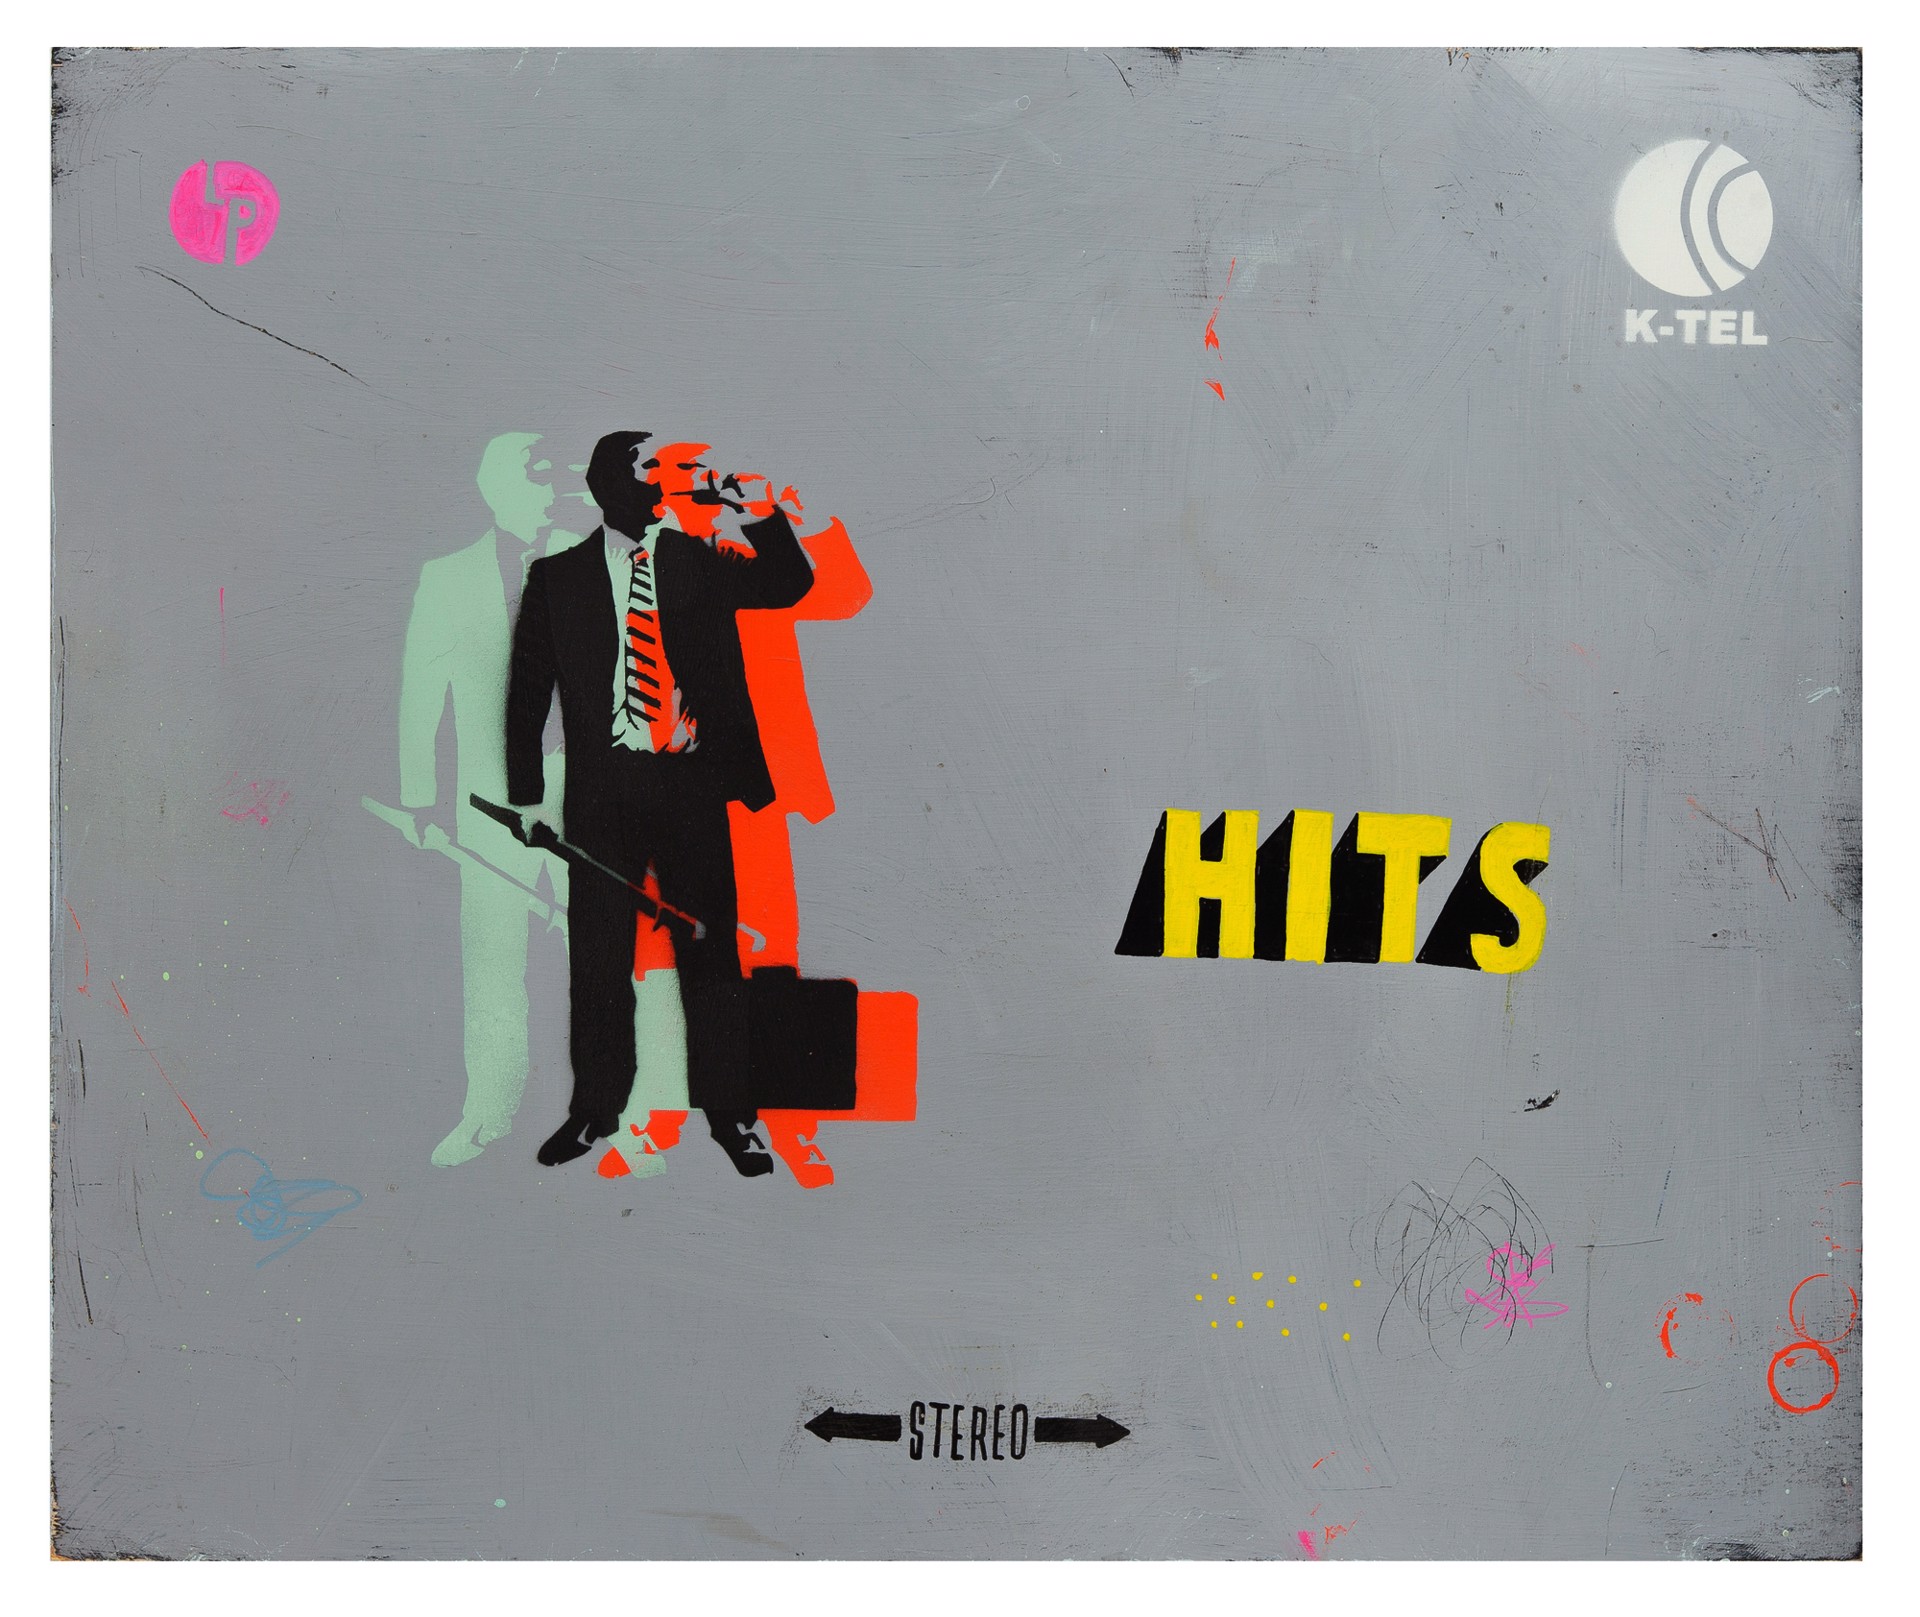 K-Tel Hits by Bill Barminski